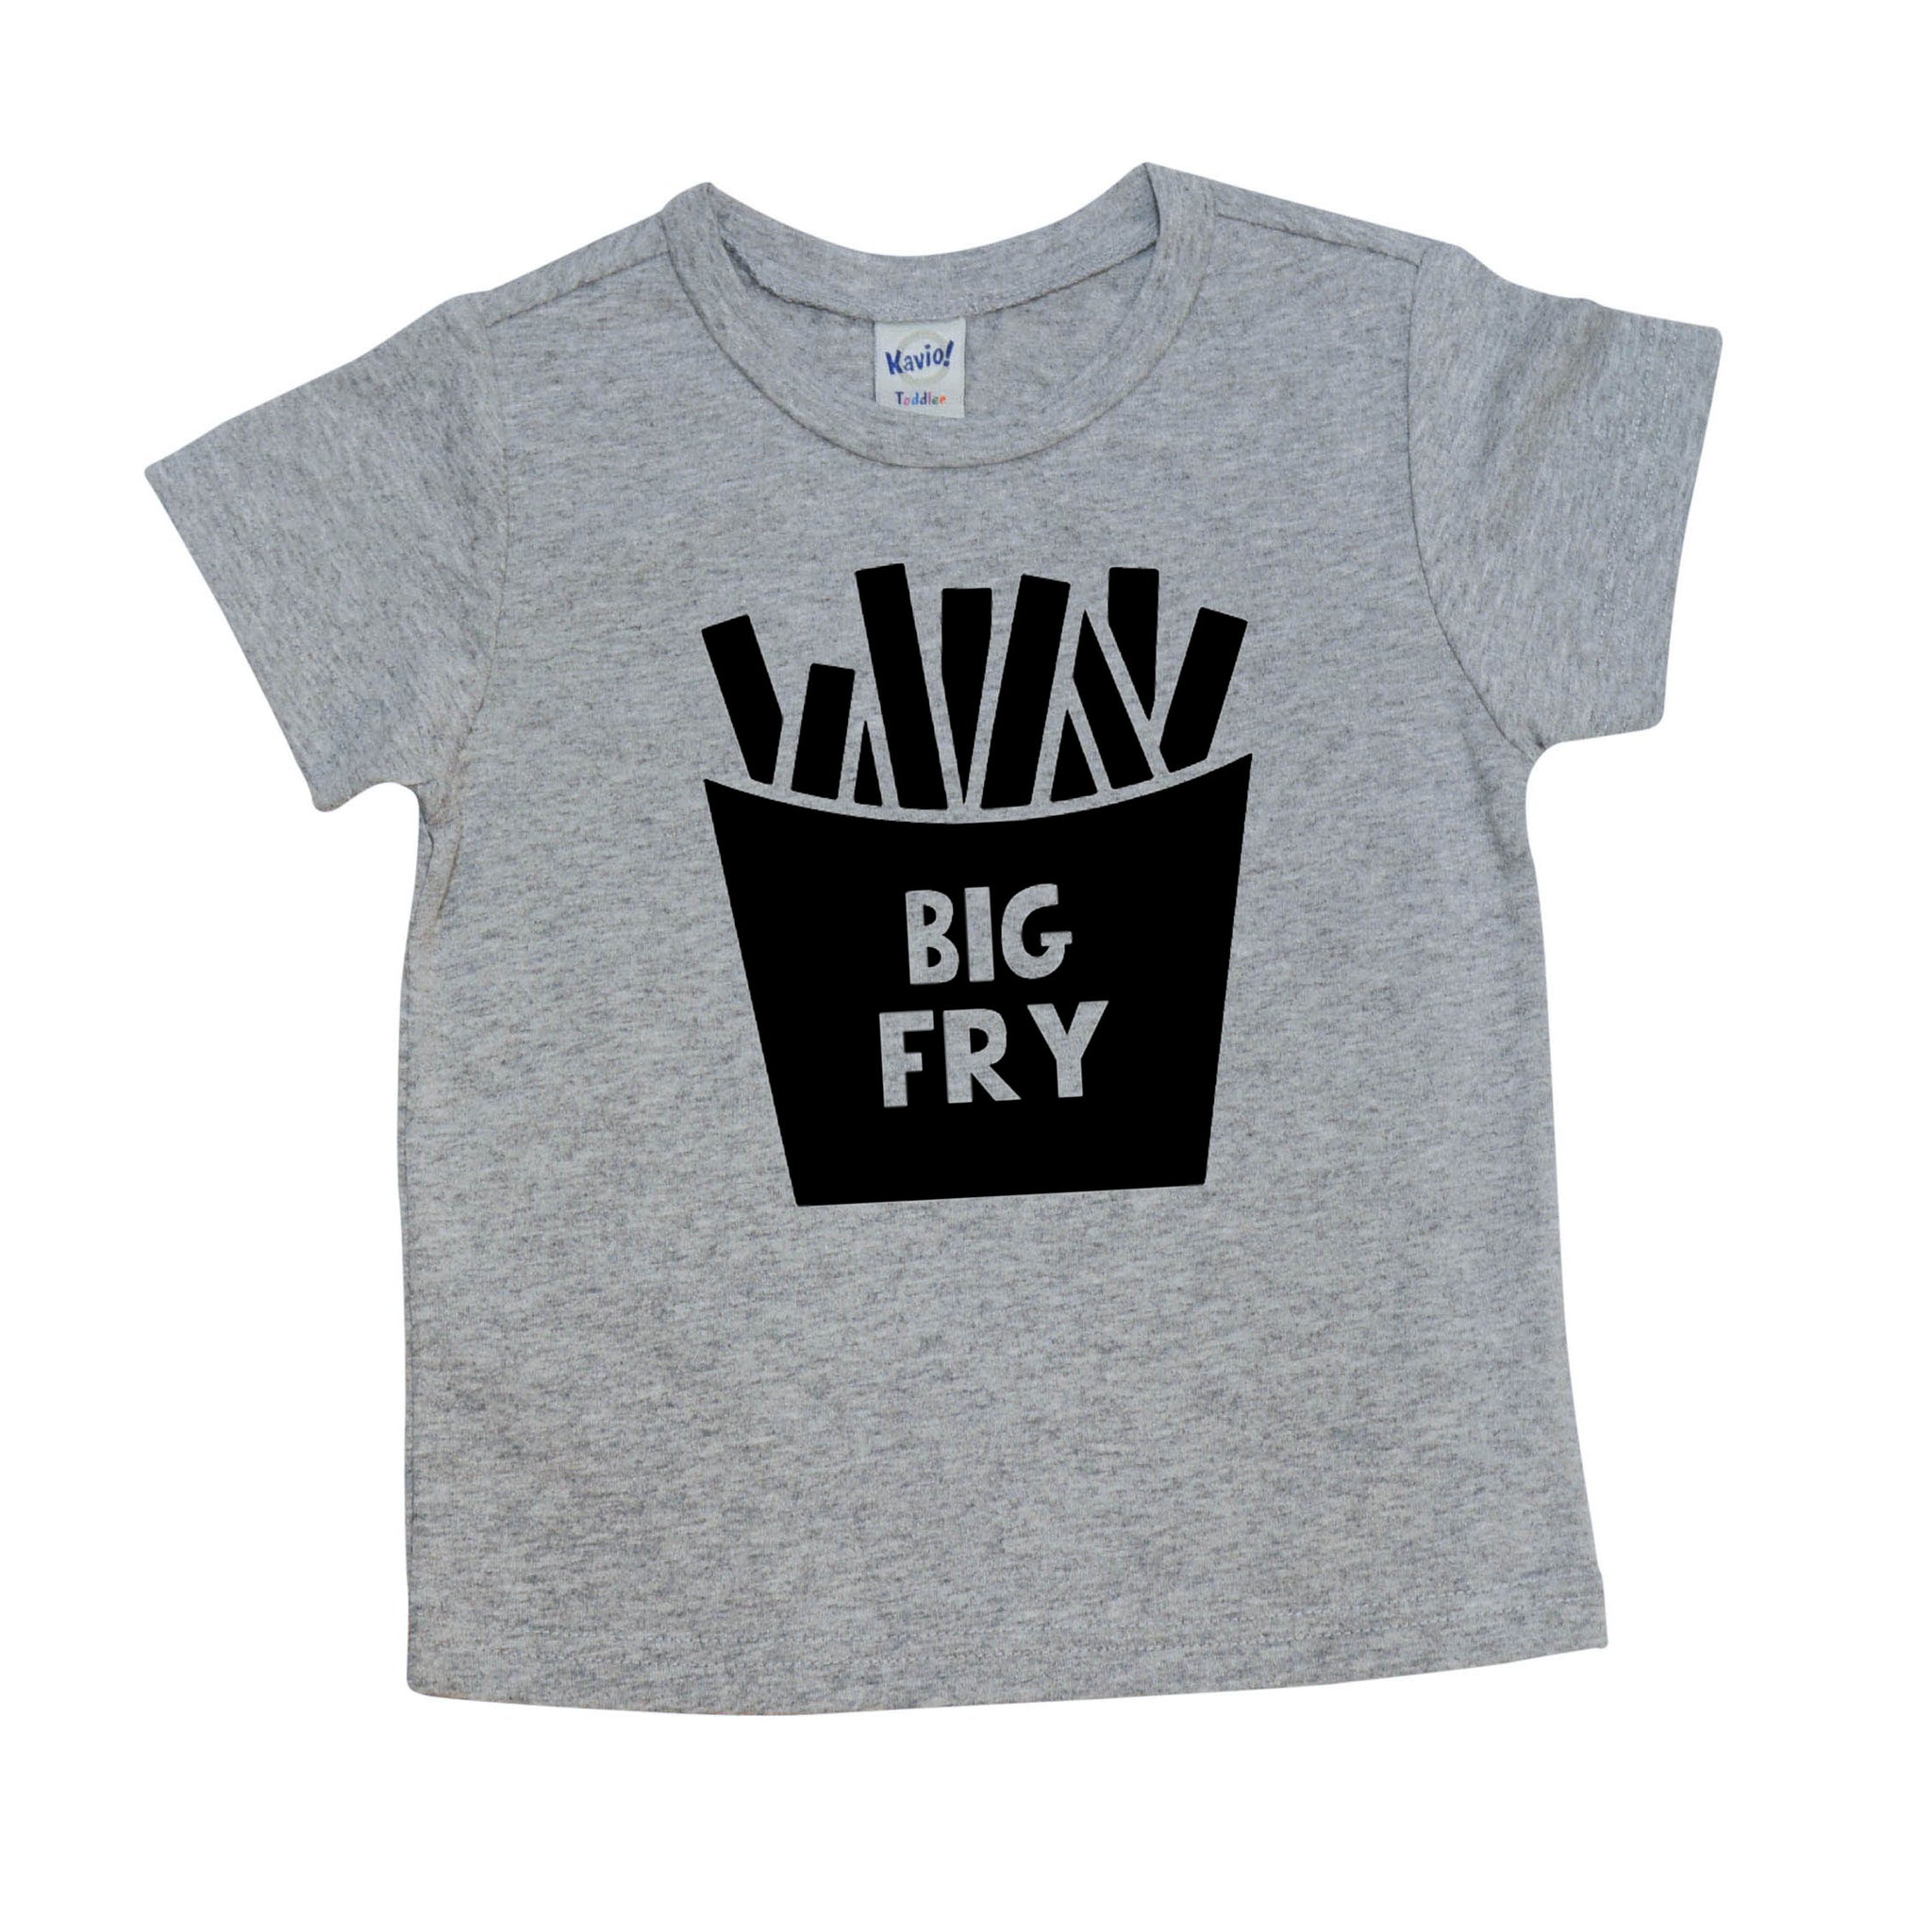 Big Fry Shirt | Short Sleeve Shirt | Pregnancy Announcement, Siblings, Girls, Boys | 552